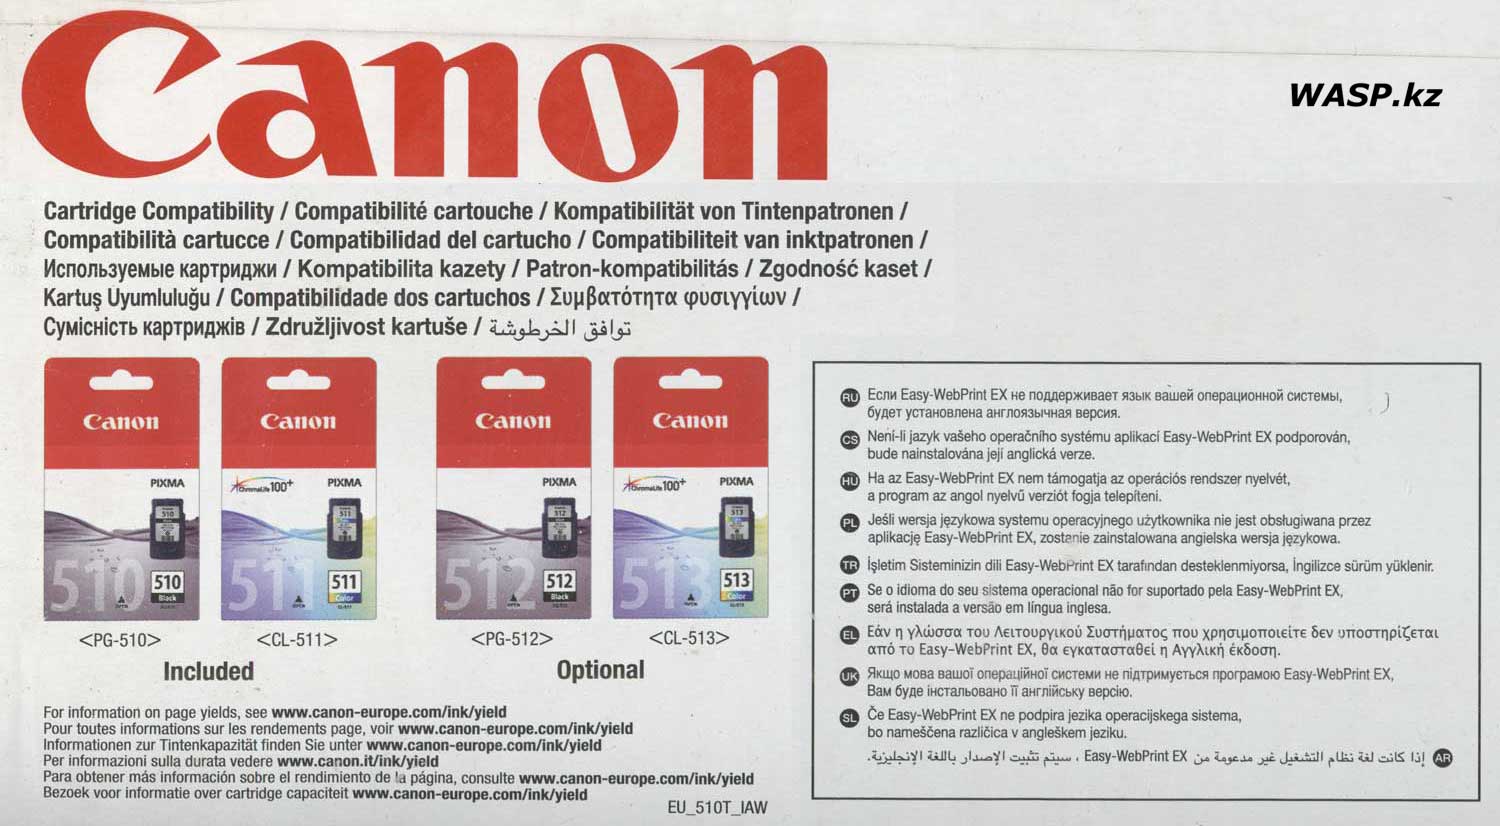 Canon PIXMA MP250 полное описание МФУ Easy-WebPrint EX